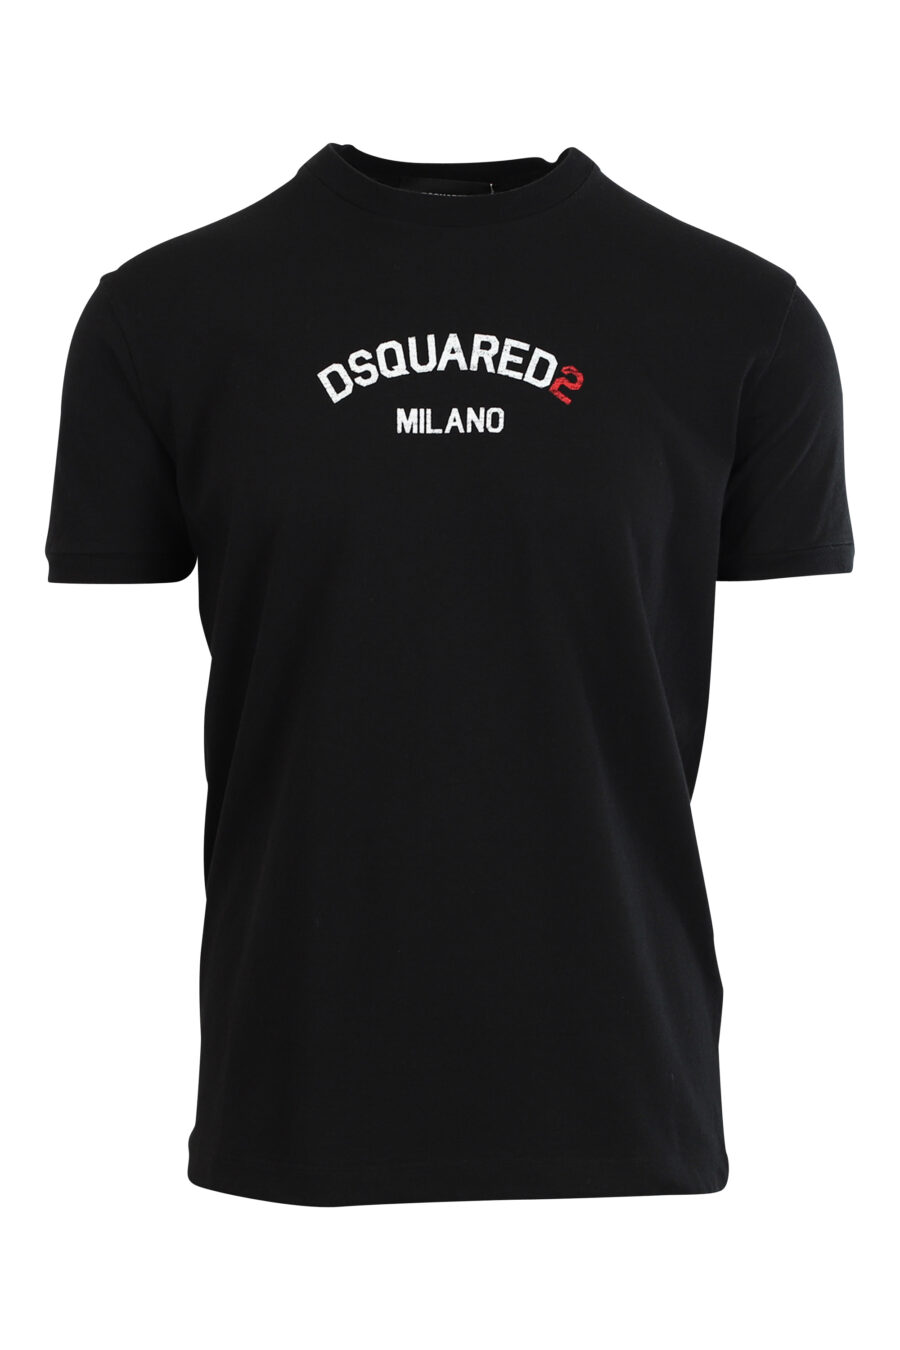 Camiseta negra con minilogo "dsquared2 milano" - 8058049836090